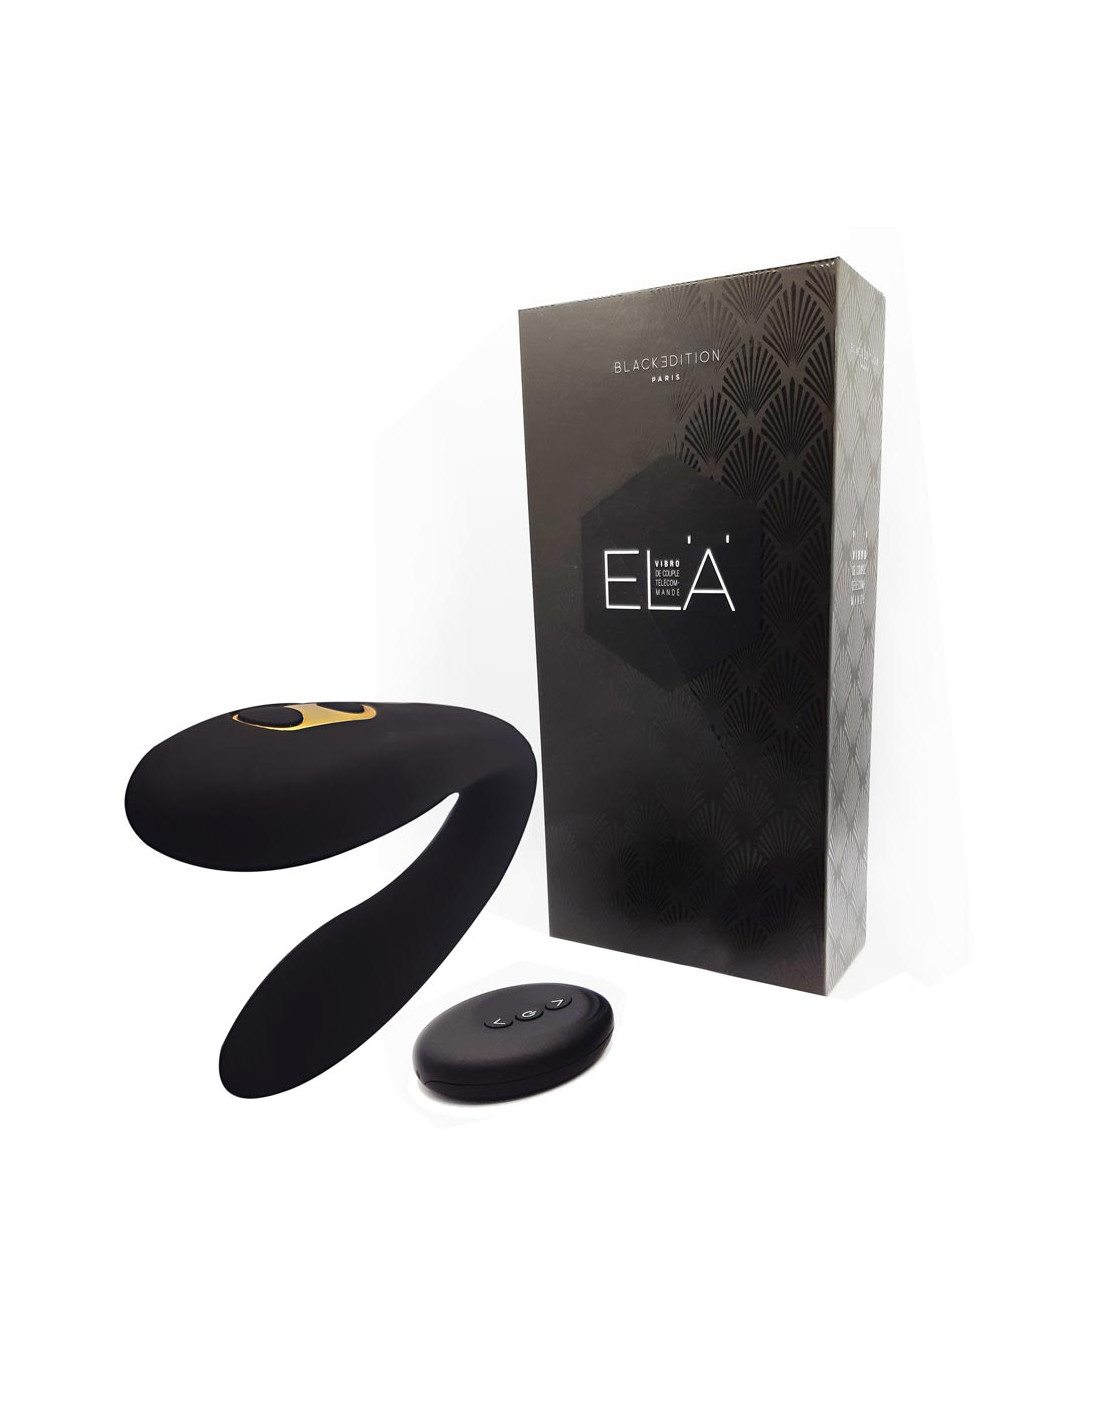 Black Edition Stimulateur de couple telecommande ELA edam6fdD